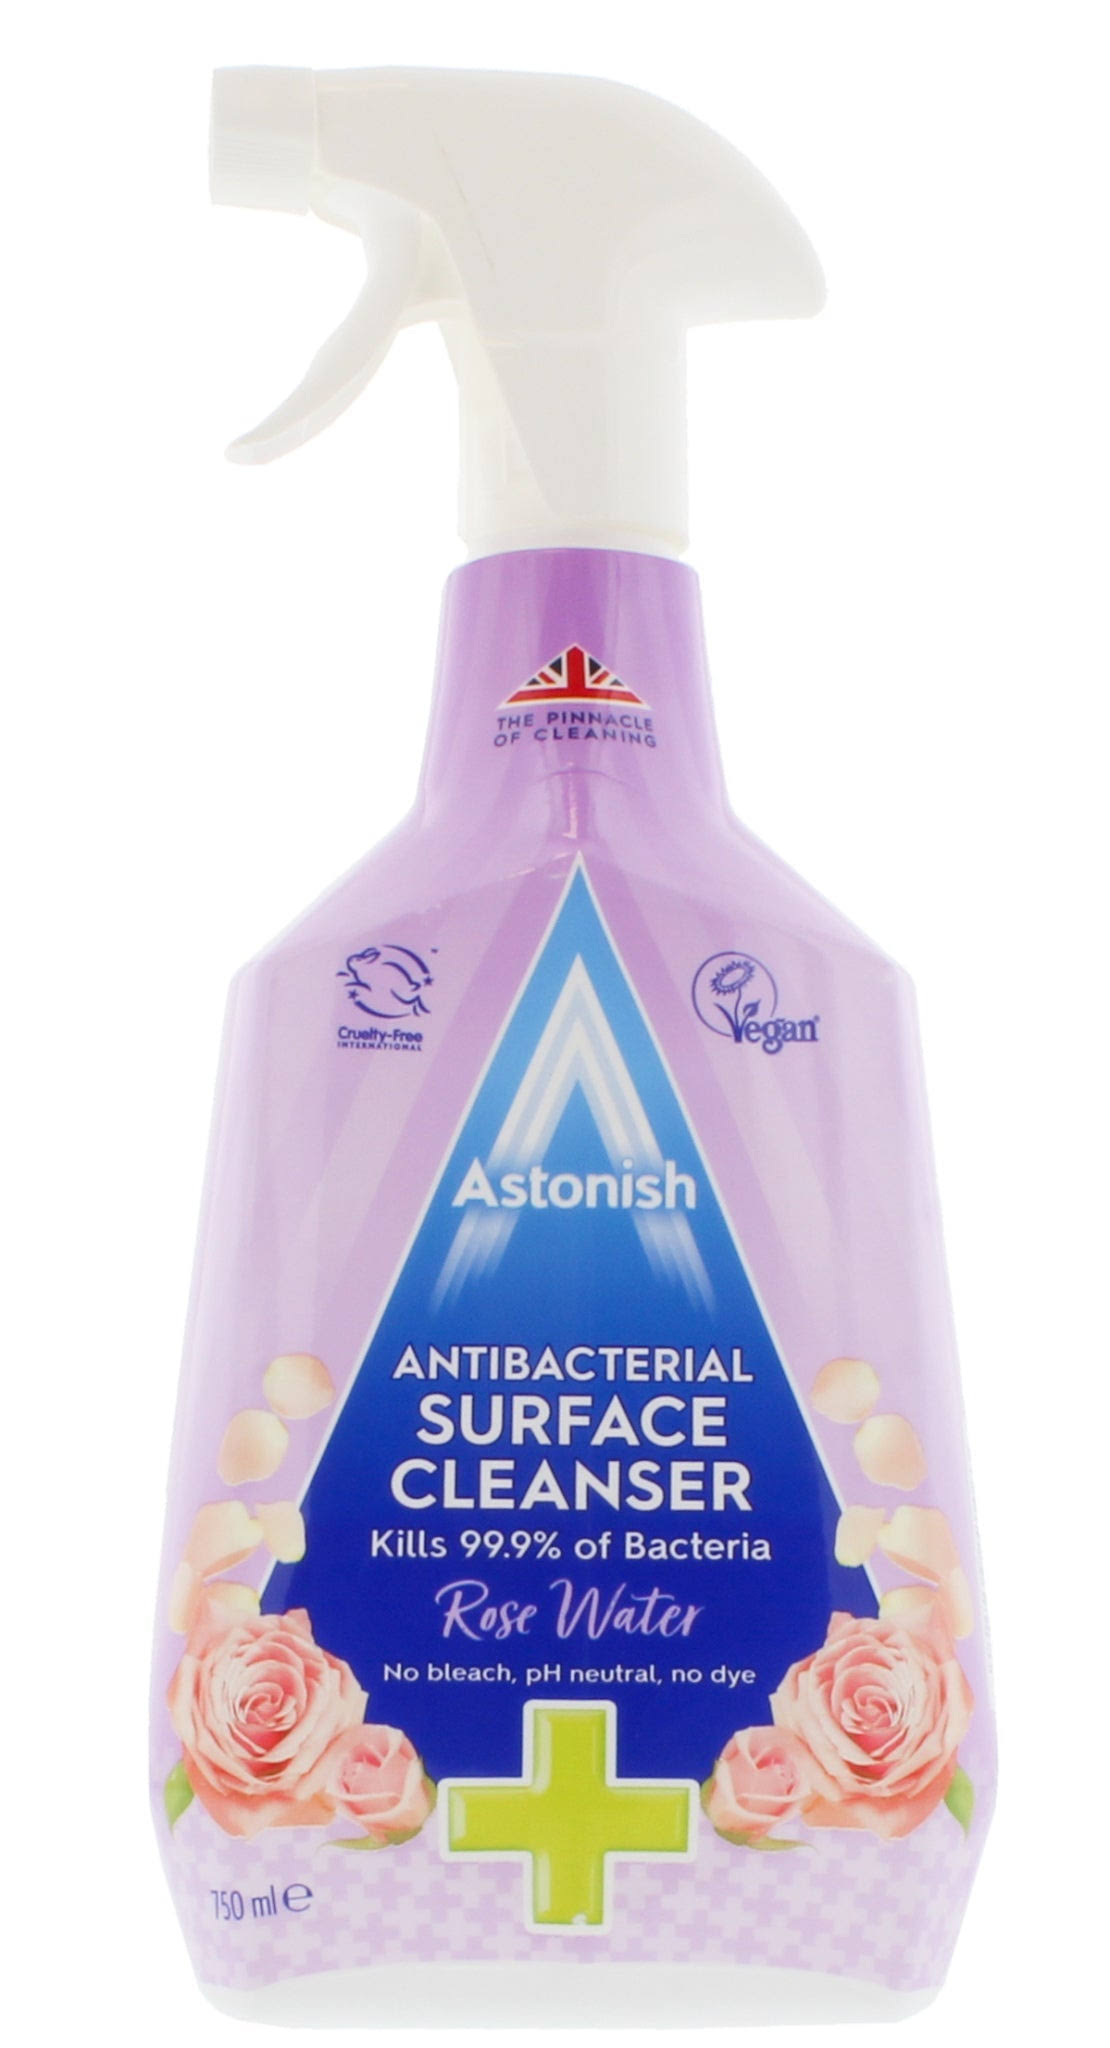 Astonish Anti-Bacterial Cleanser - Cleaner - liquid - spray bottle - 750 ml